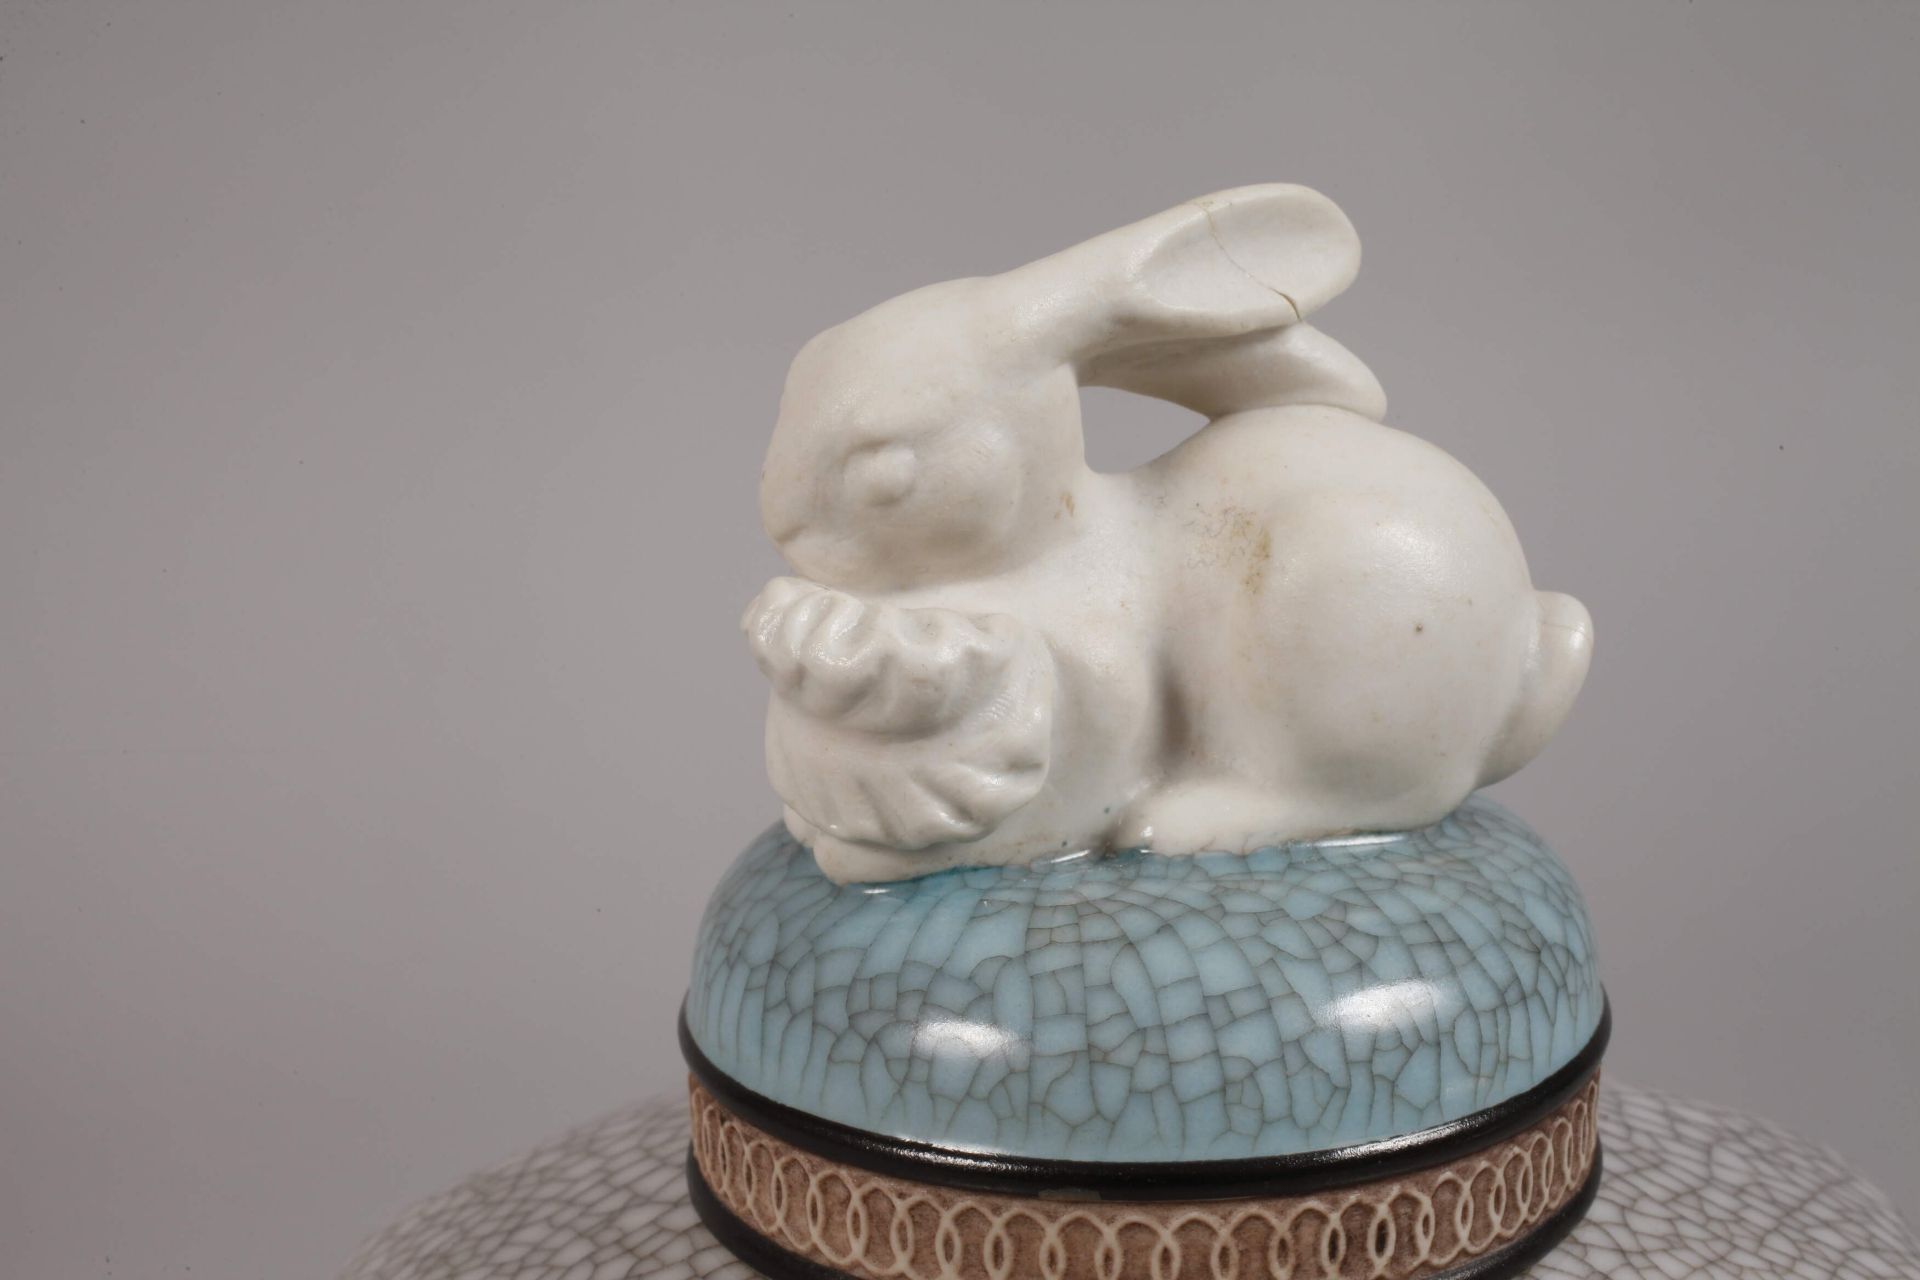 Copenhagen lidded urn with rabbit knob - Image 2 of 4